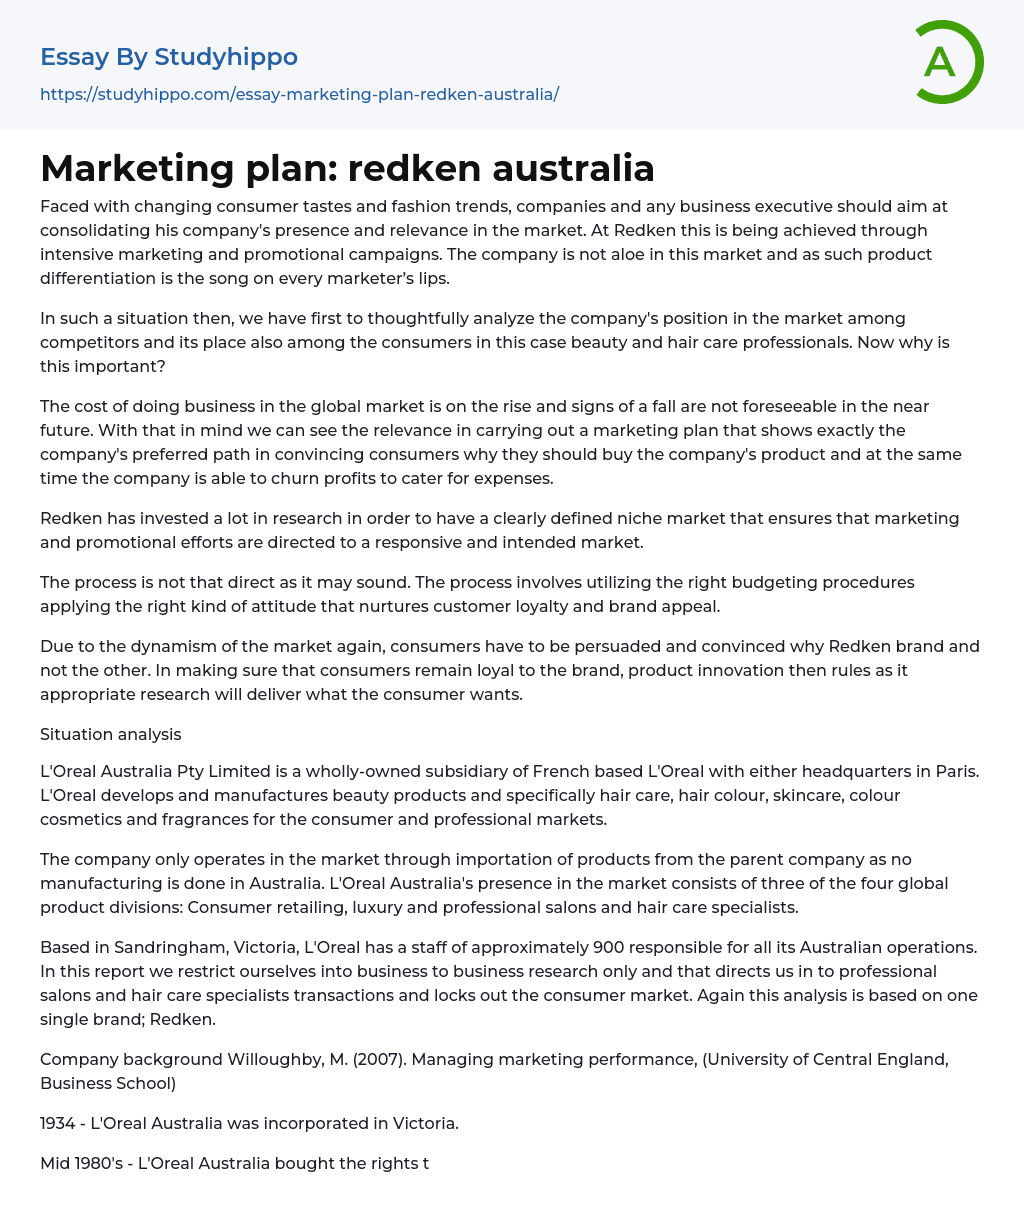 Marketing plan: redken australia Essay Example